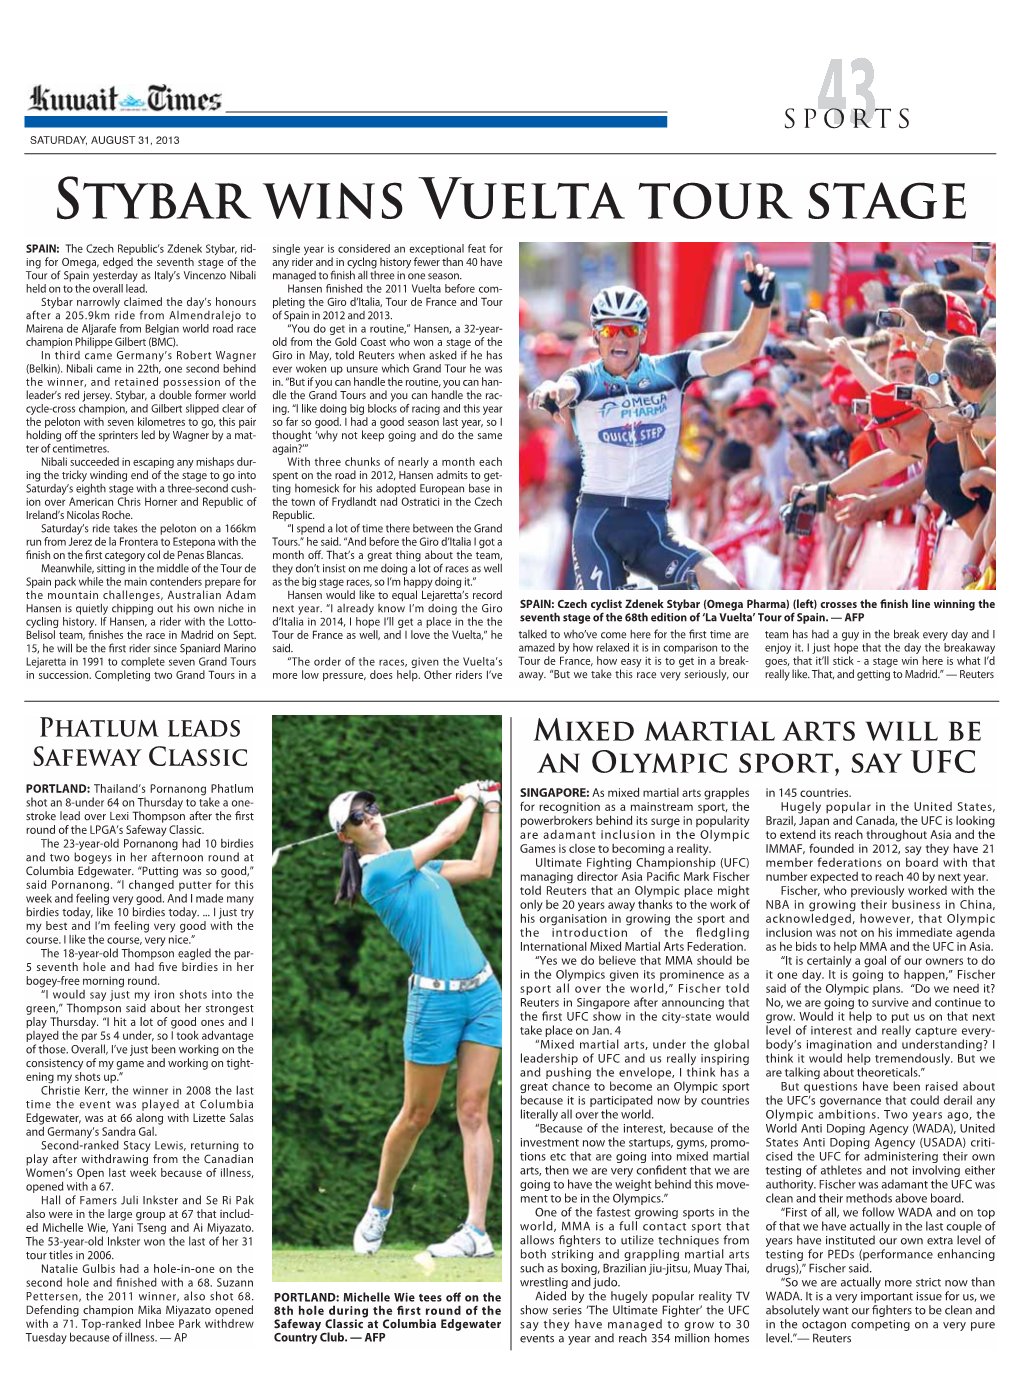 Stybar Wins Vuelta Tour Stage